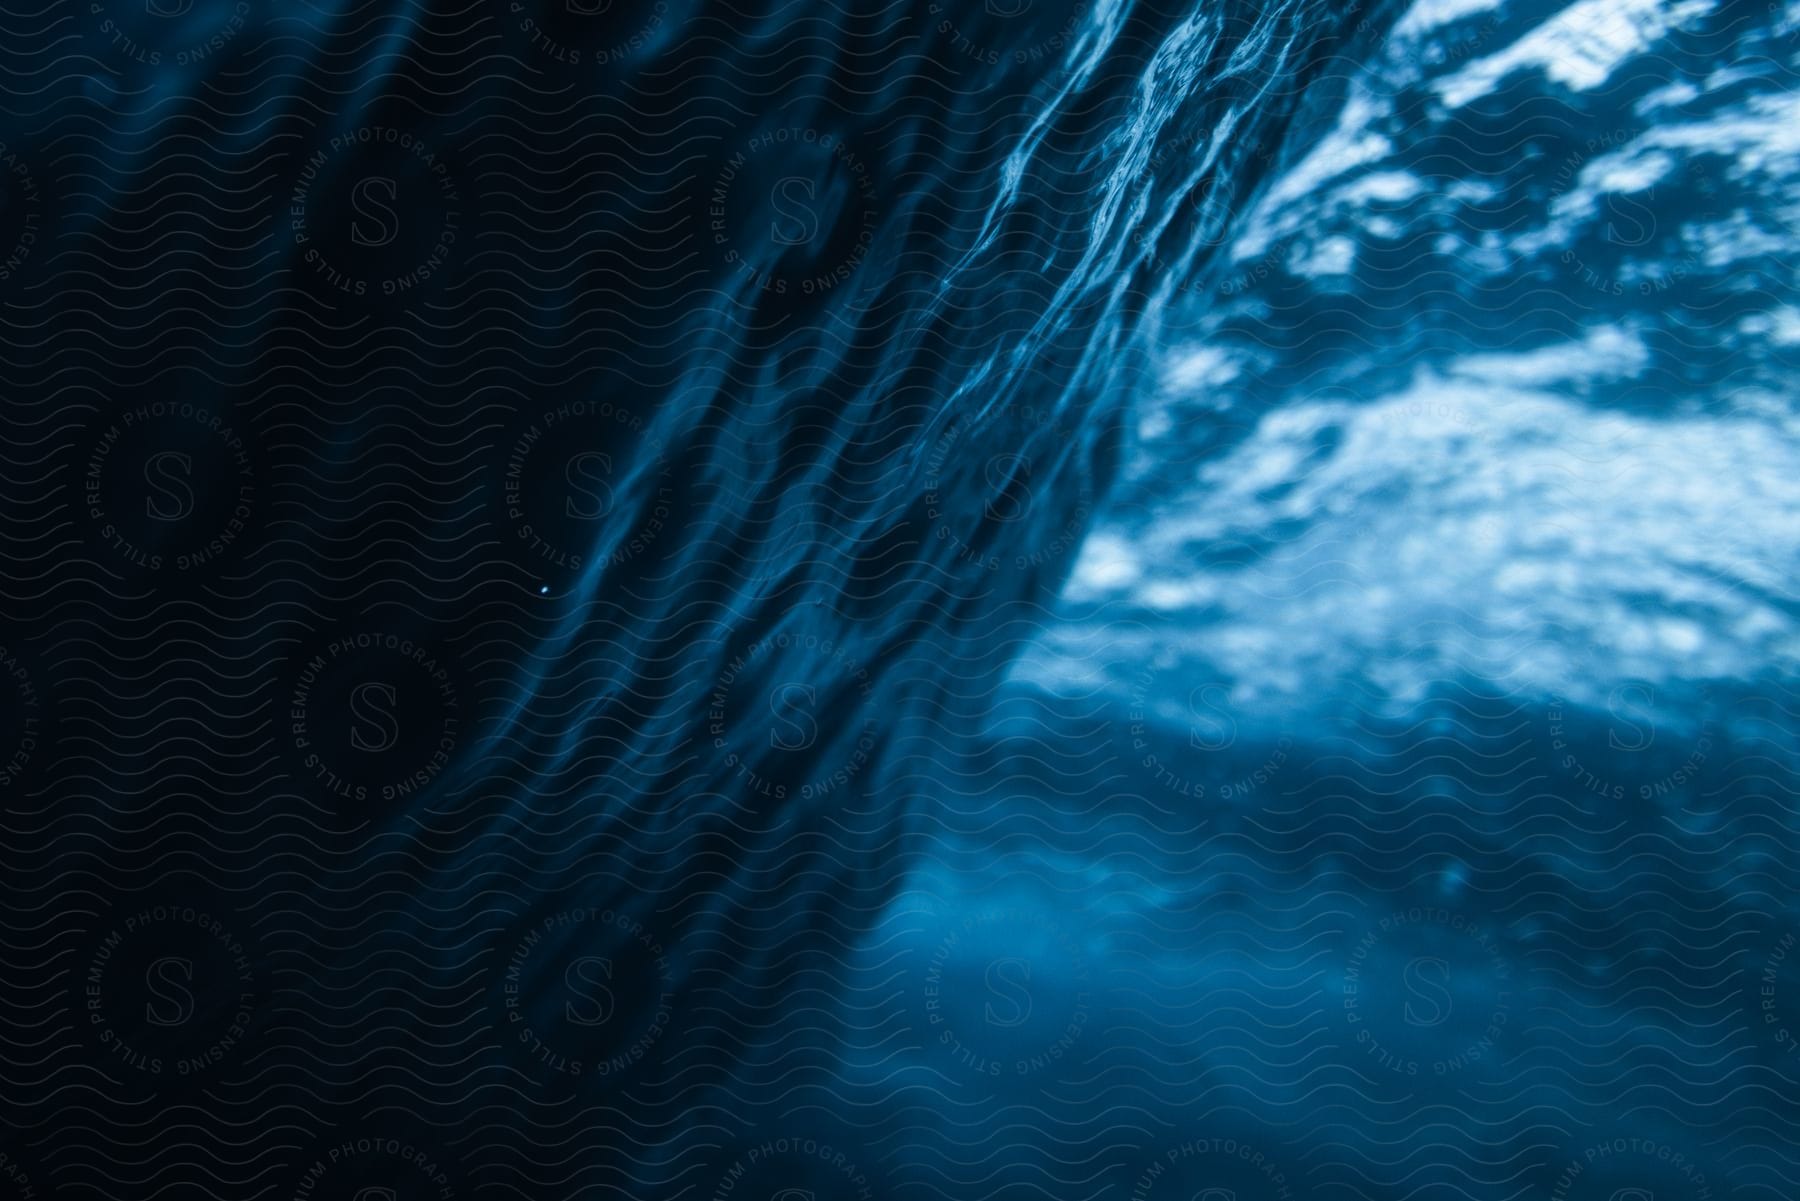 Underwater view of an ocean wave turning.